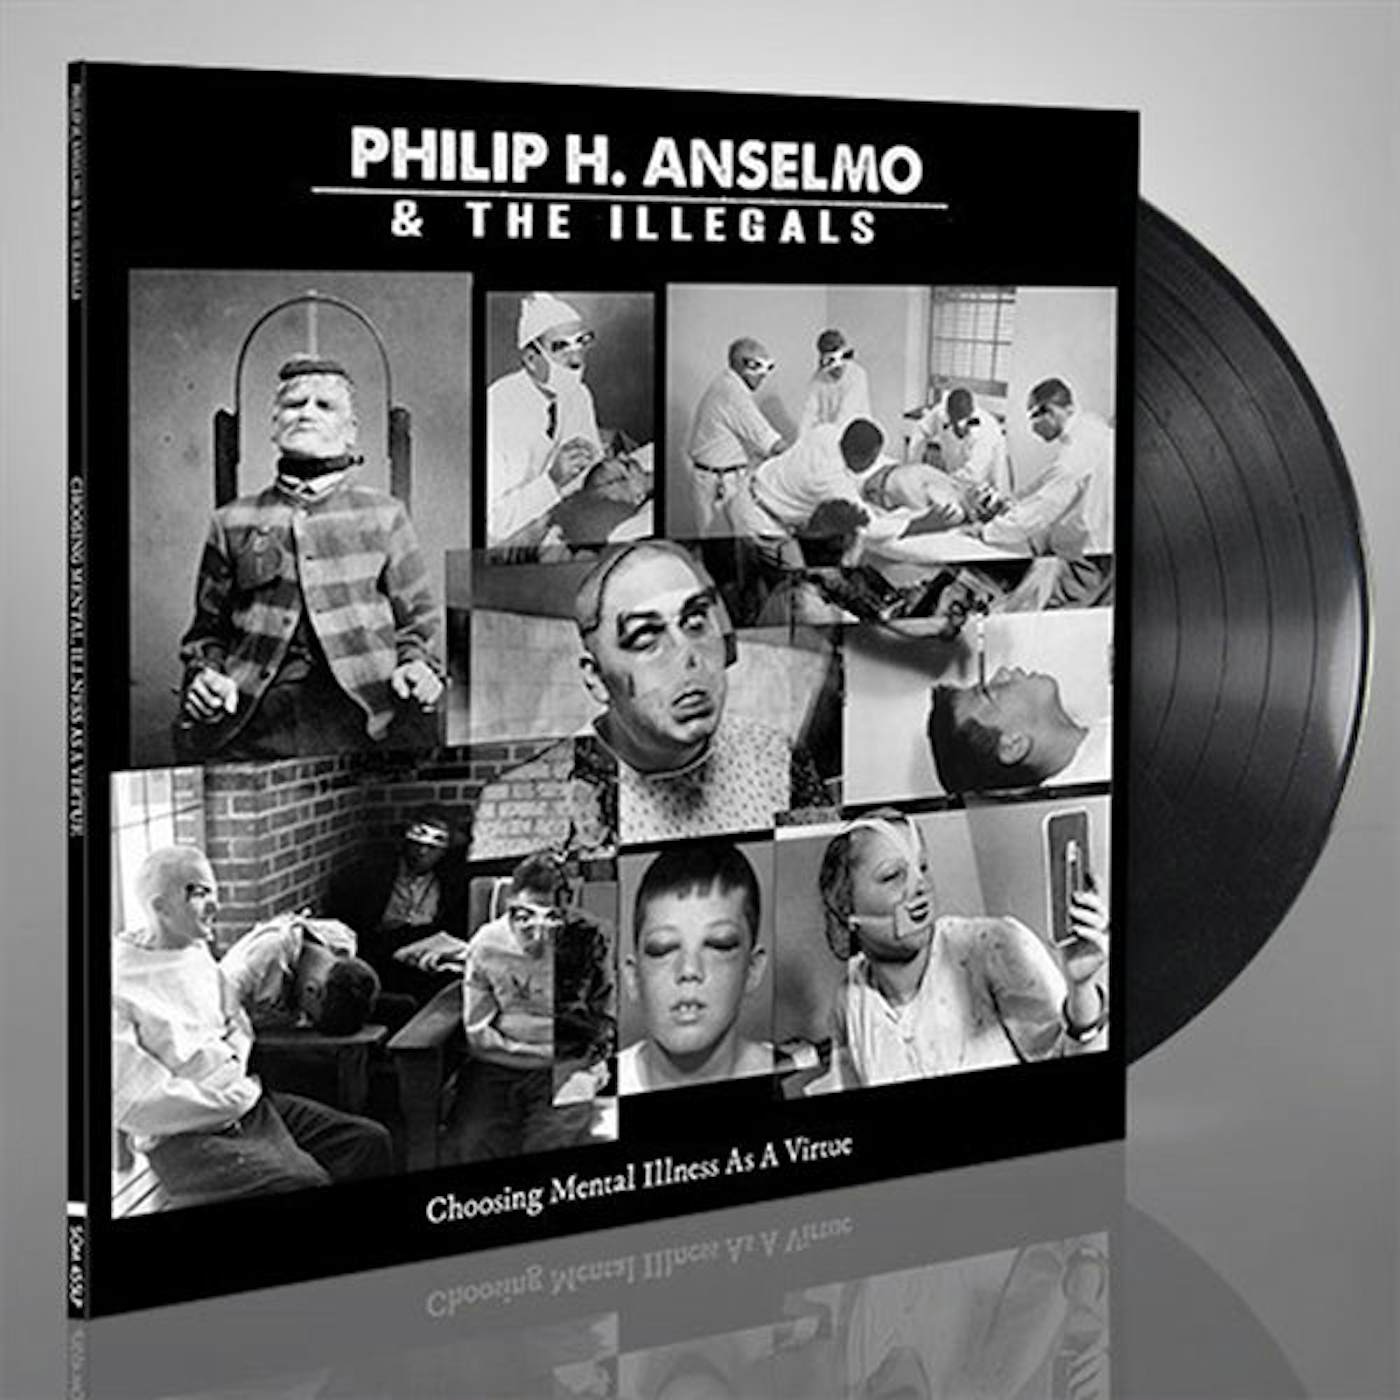 Philip H. Anselmo and The Illegals LP - Choosing Mental Illness As A Virtue (Vinyl)